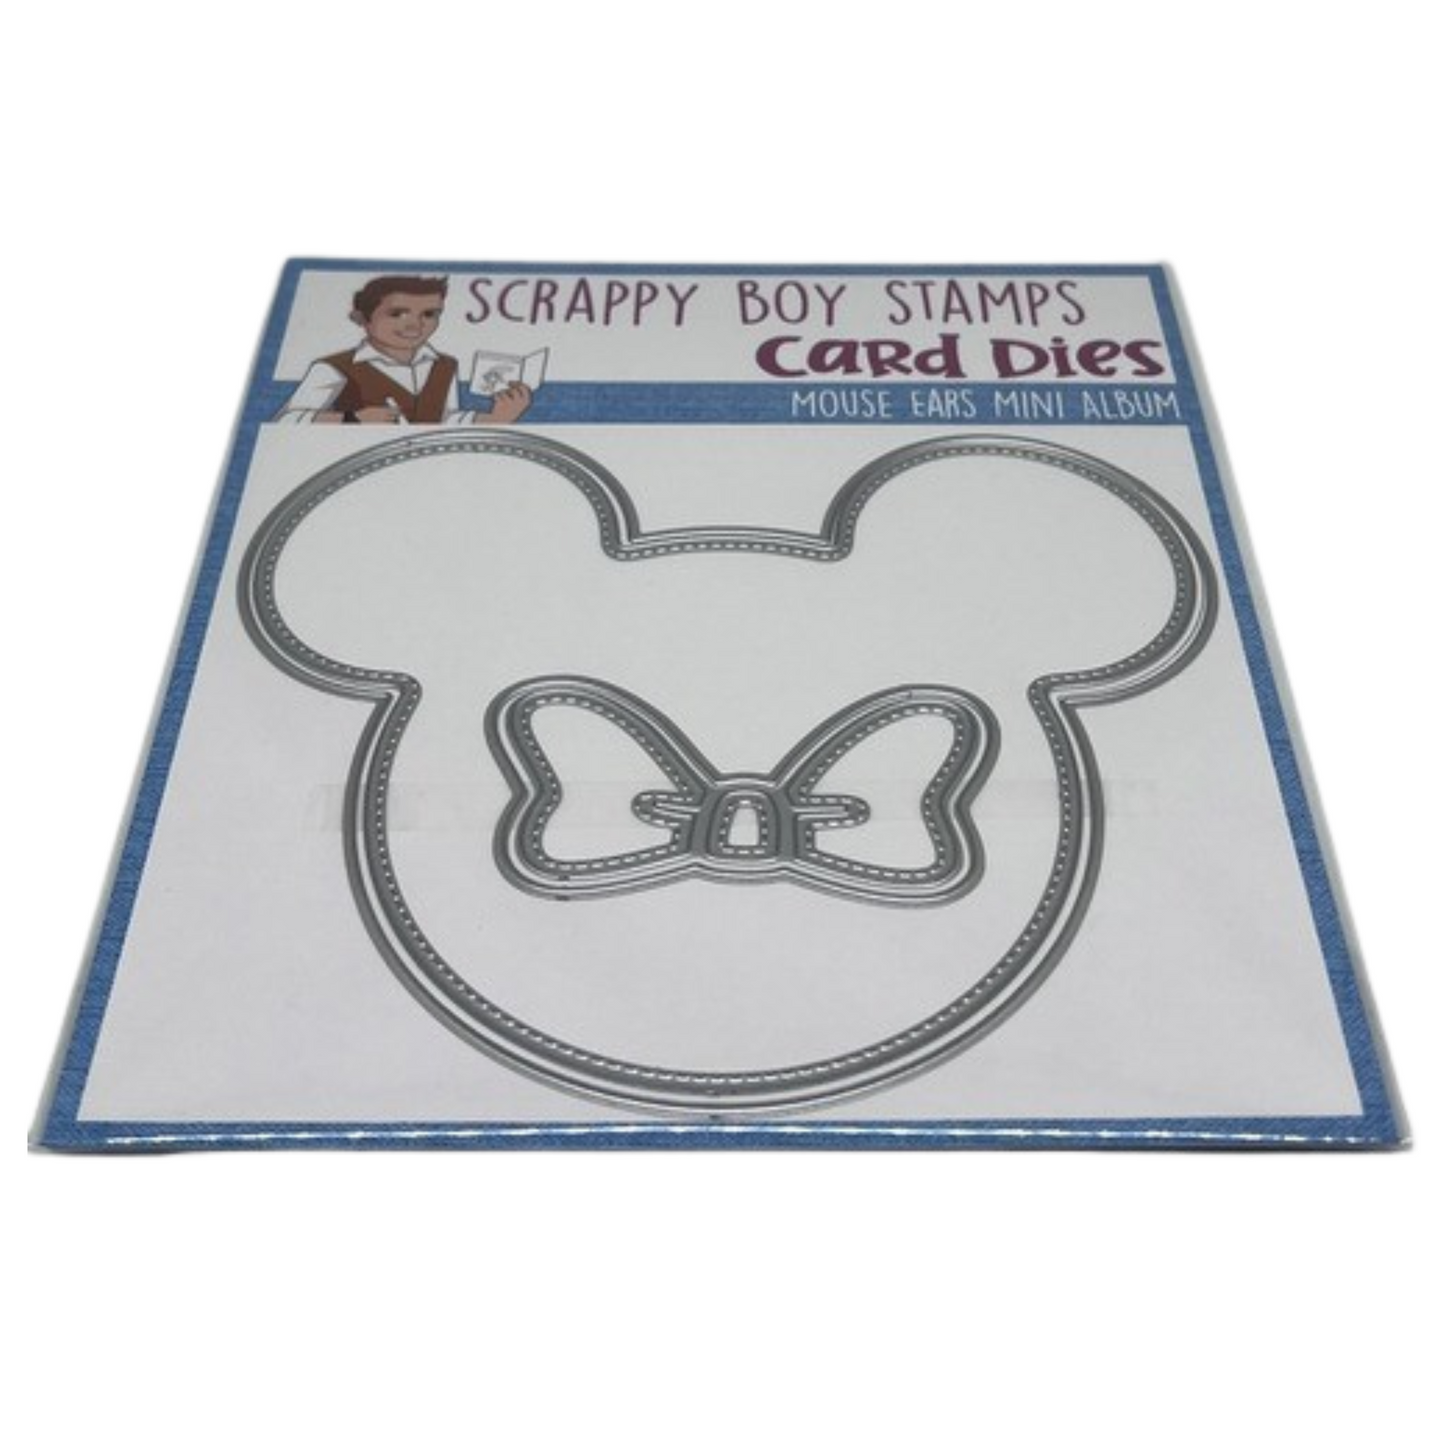 Mouse Ears Mini Album Die Set scrappyboystamps